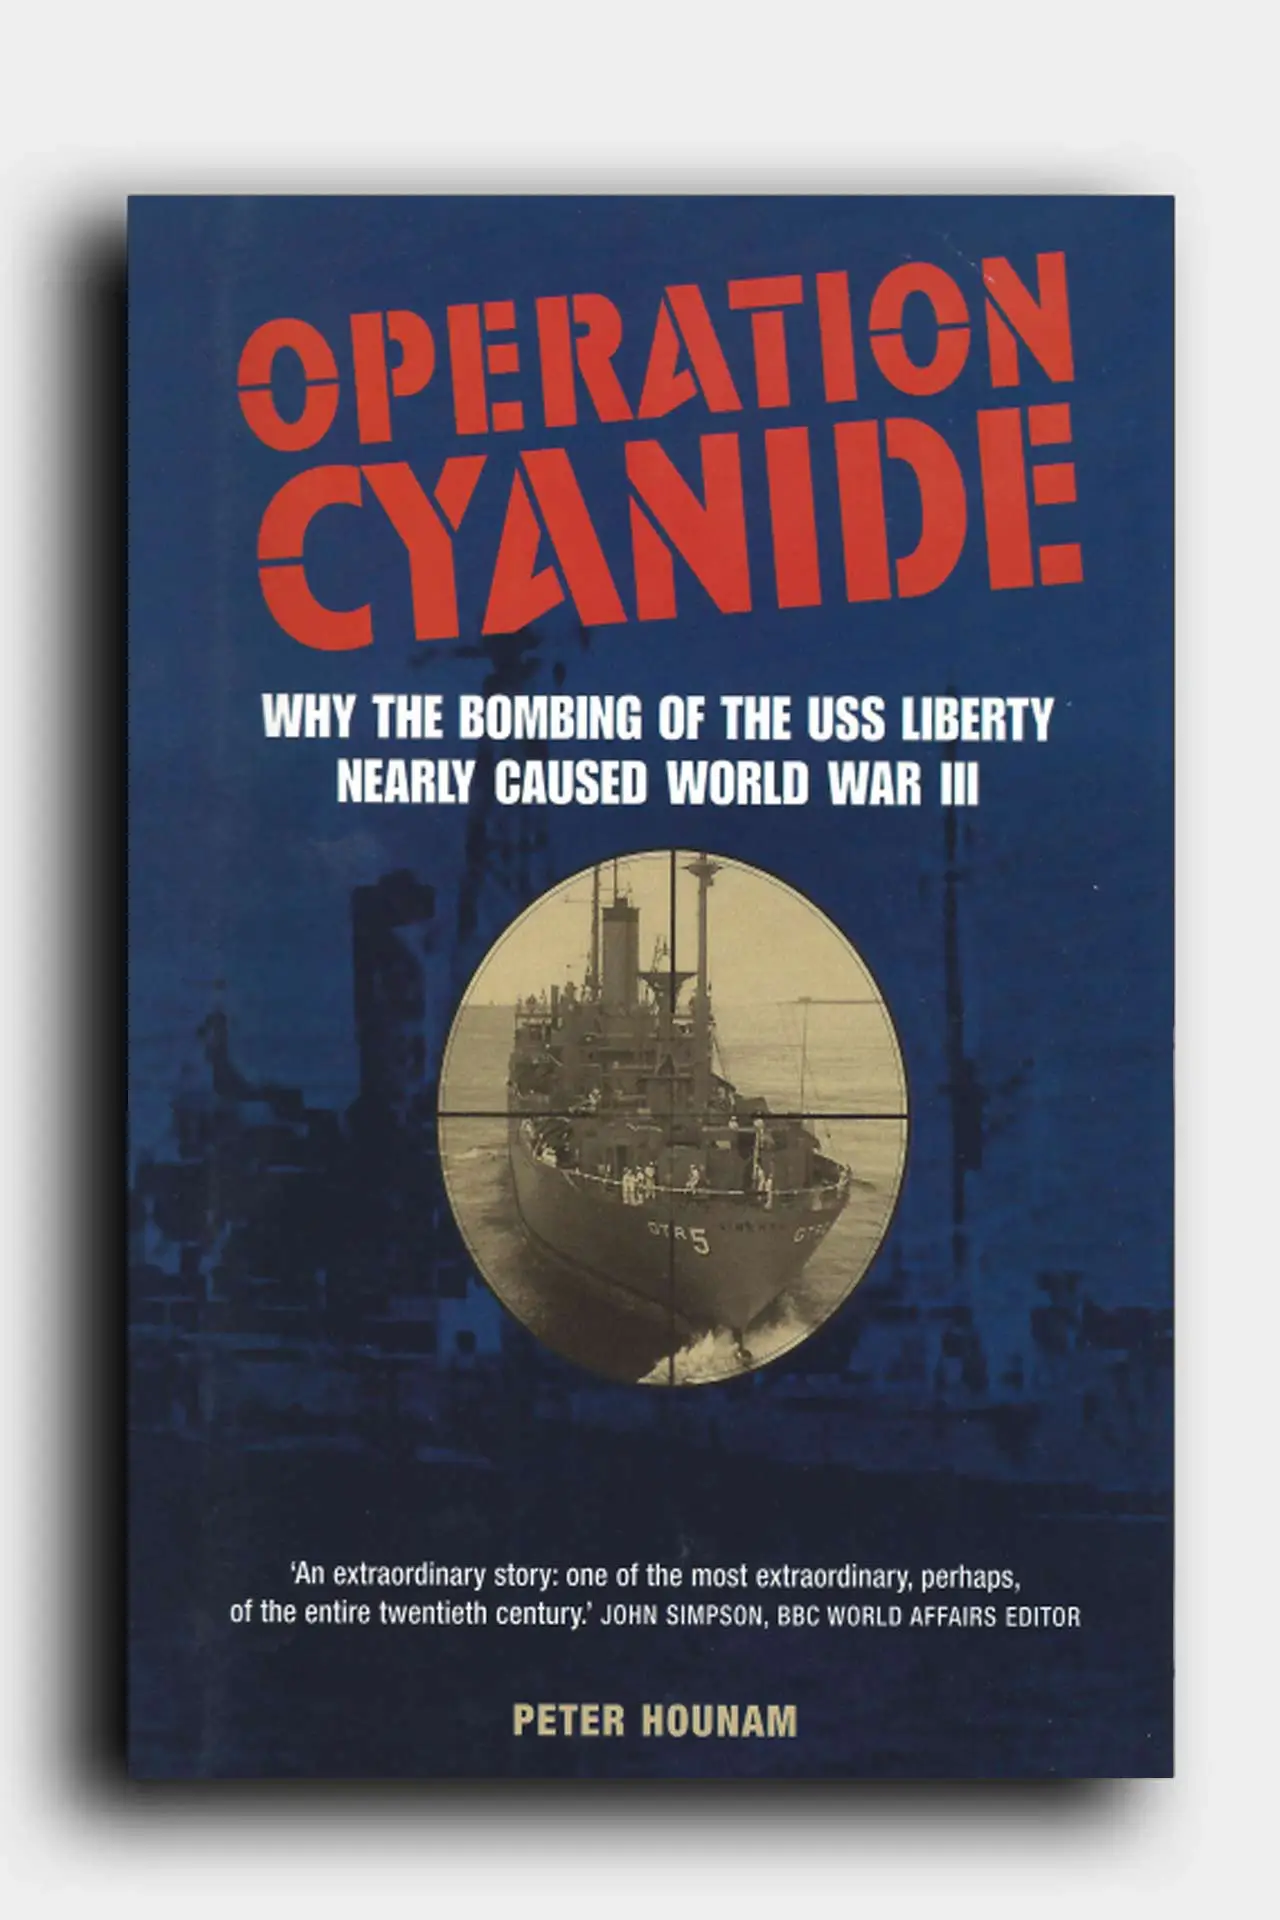 Operation Cyanide by Peter Hounam